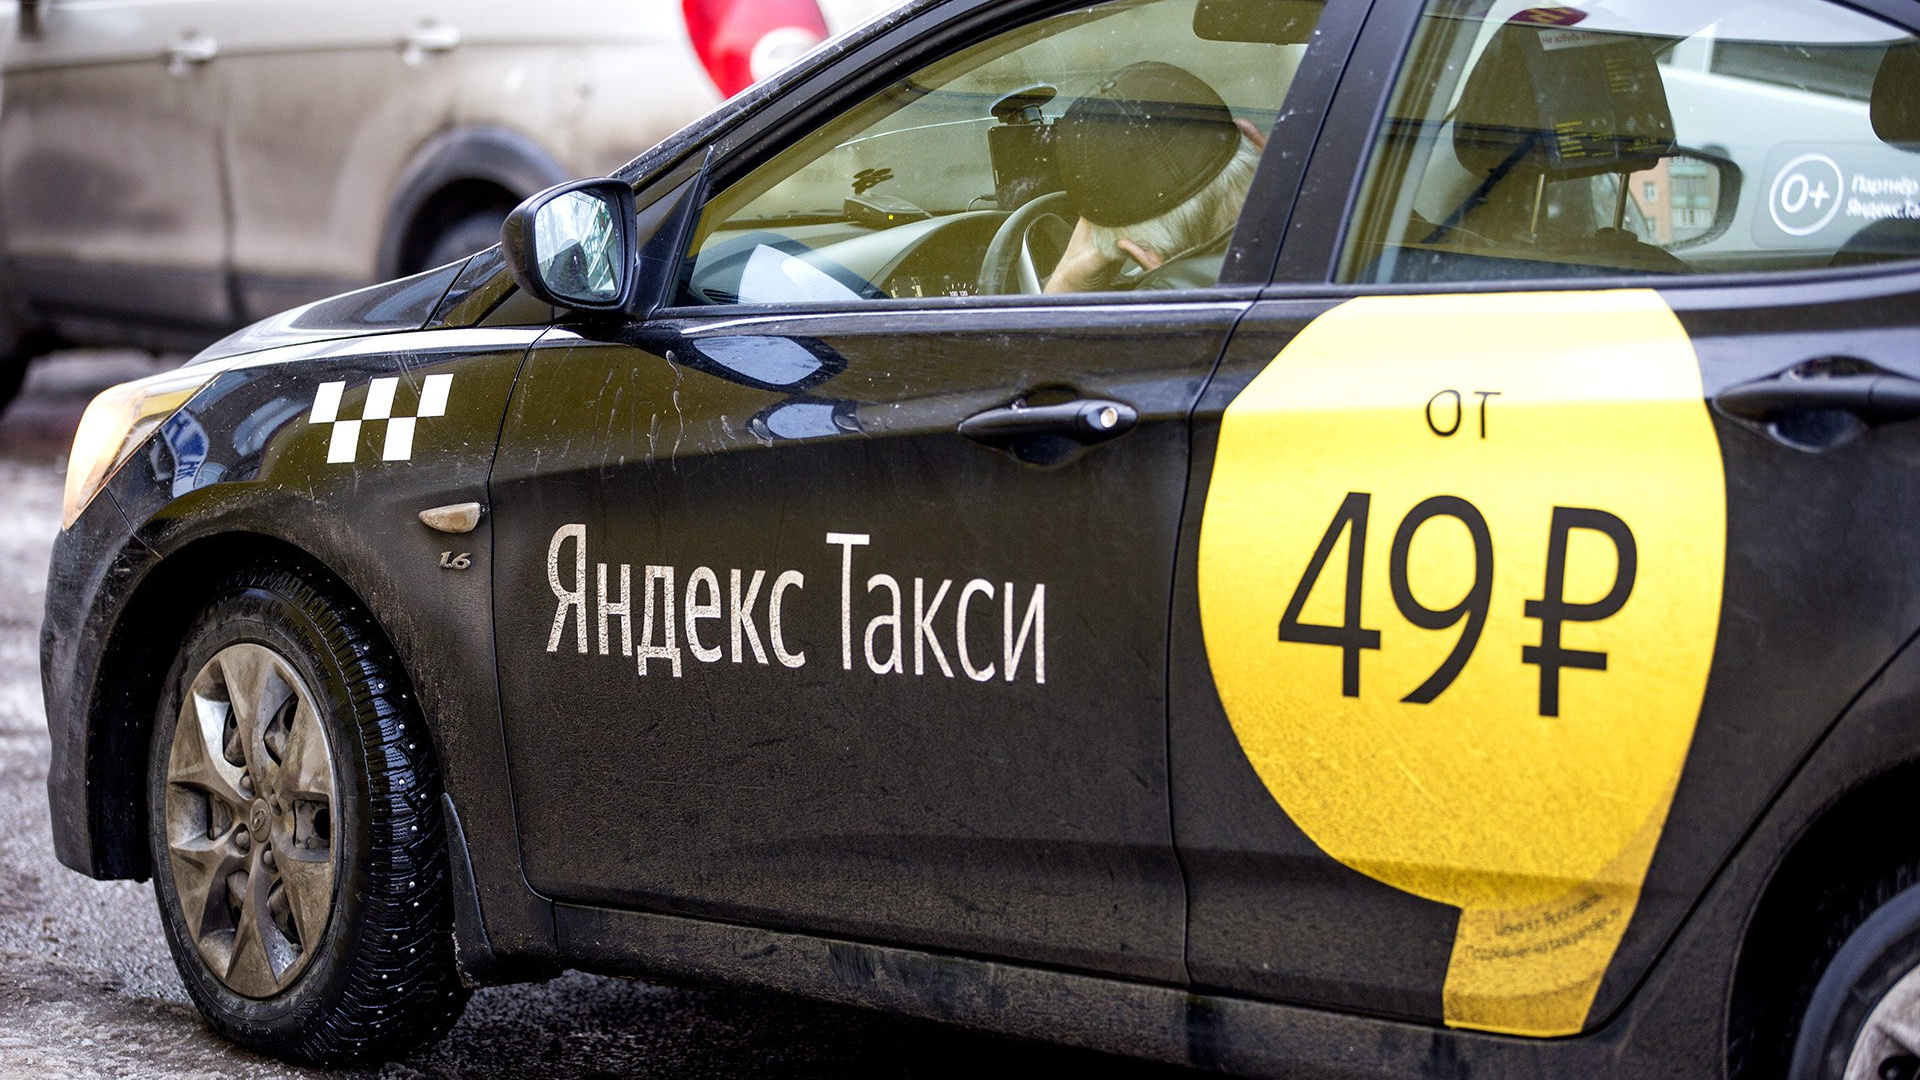 Такси рубль москва. 49 Рублей такси. Такси в городе. Последнее такси.